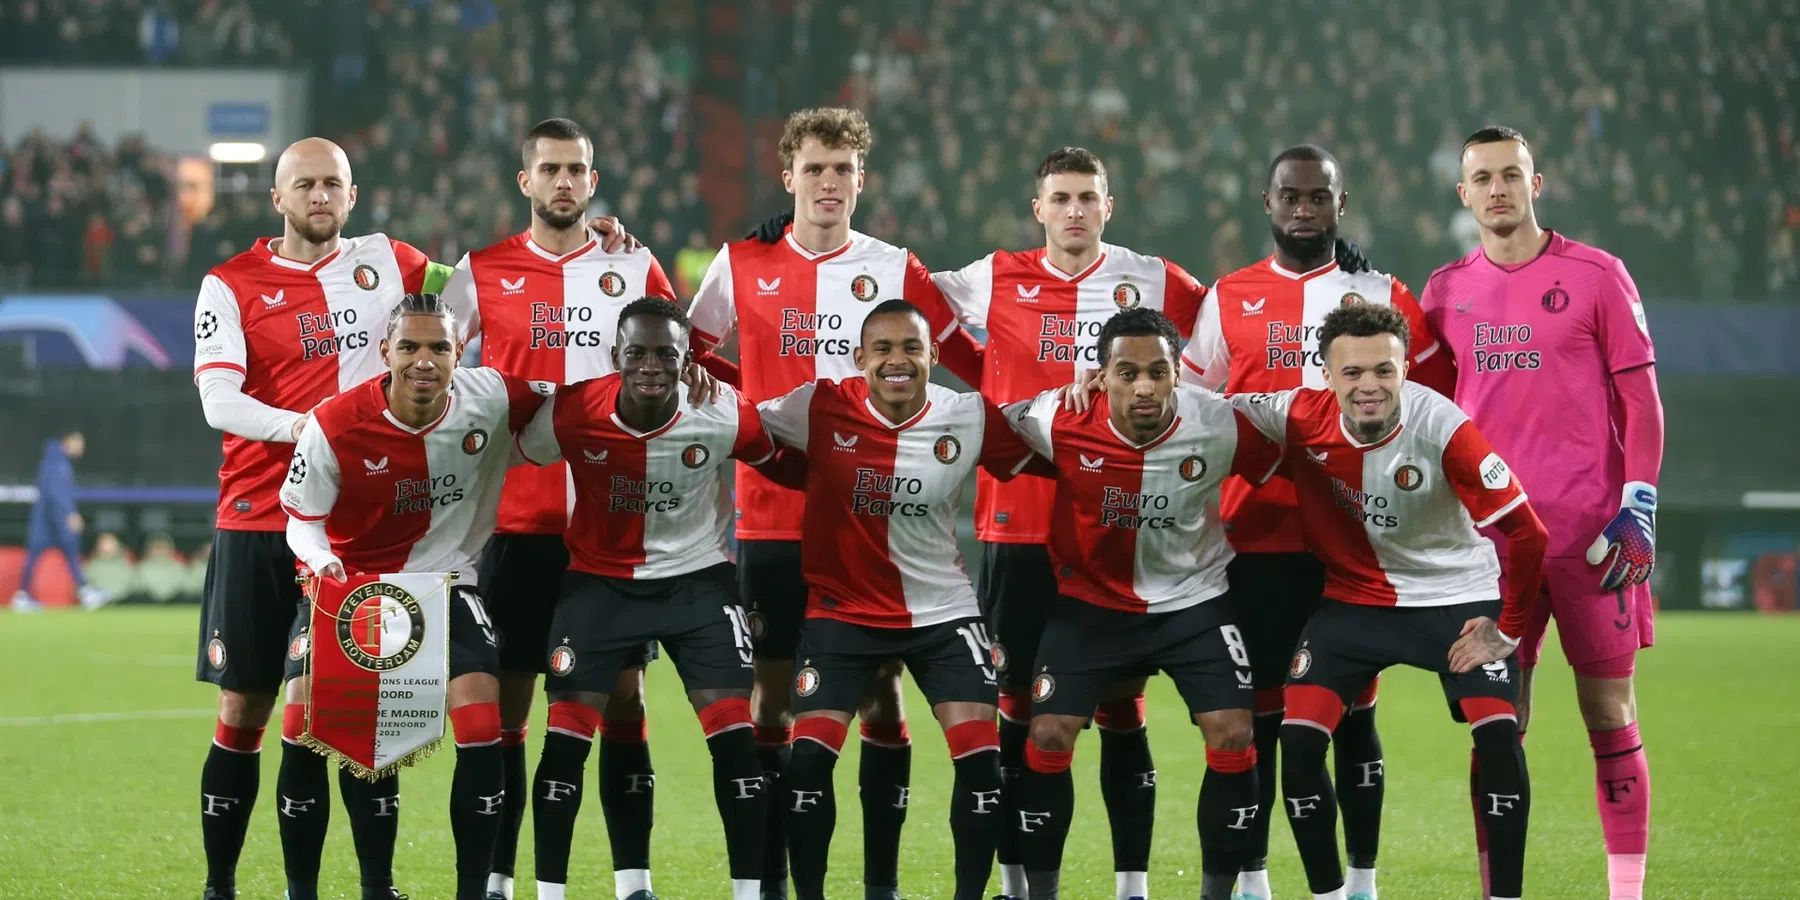 Mogelijke tegenstanders Feyenoord in tussenronde Europa League